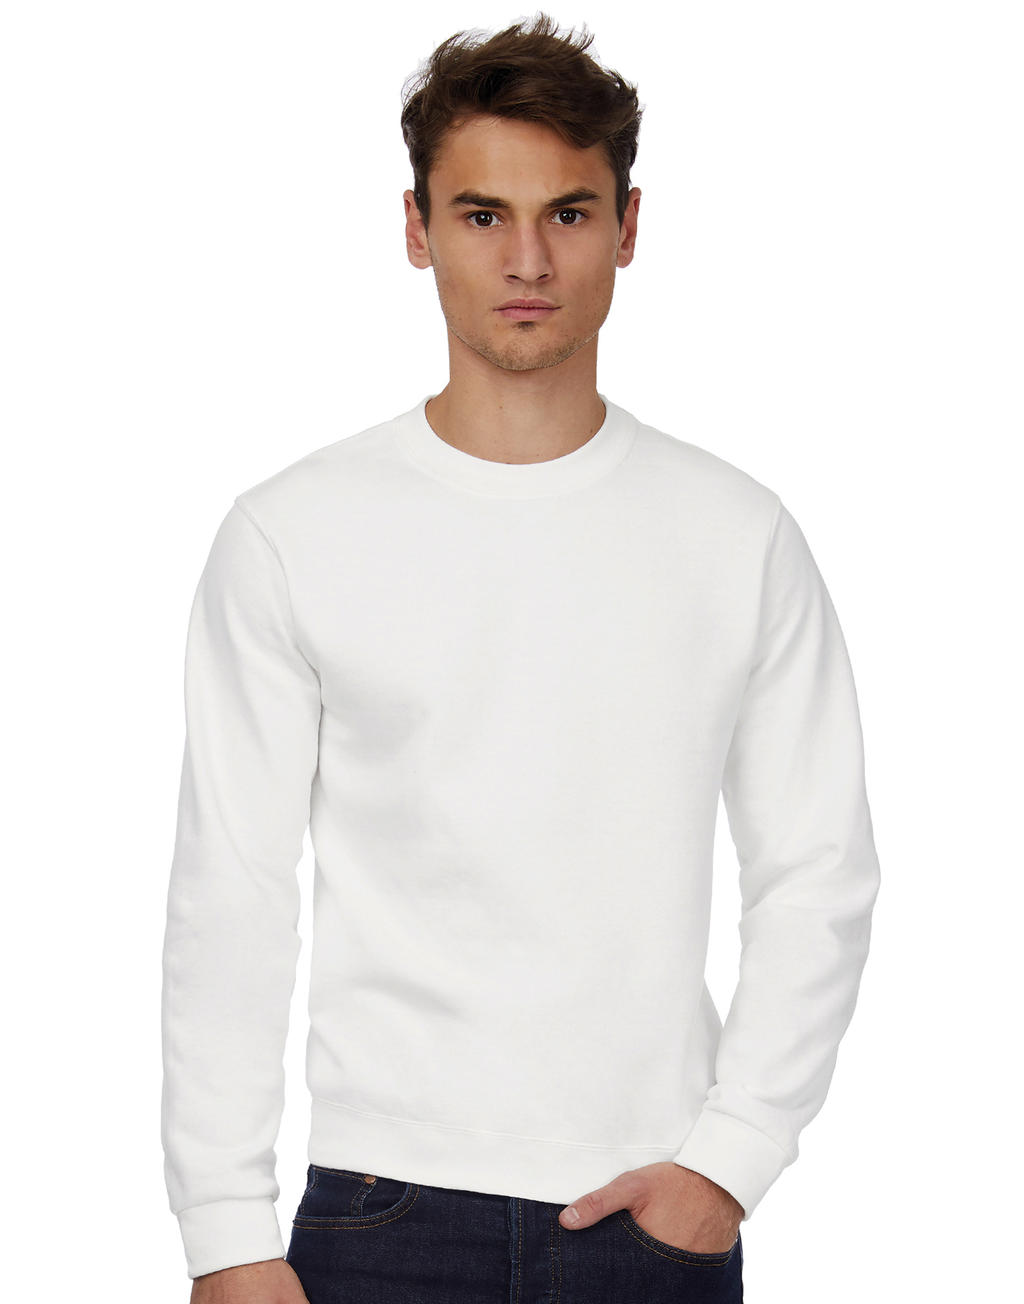  ID.002 Cotton Rich Sweatshirt  in Farbe White